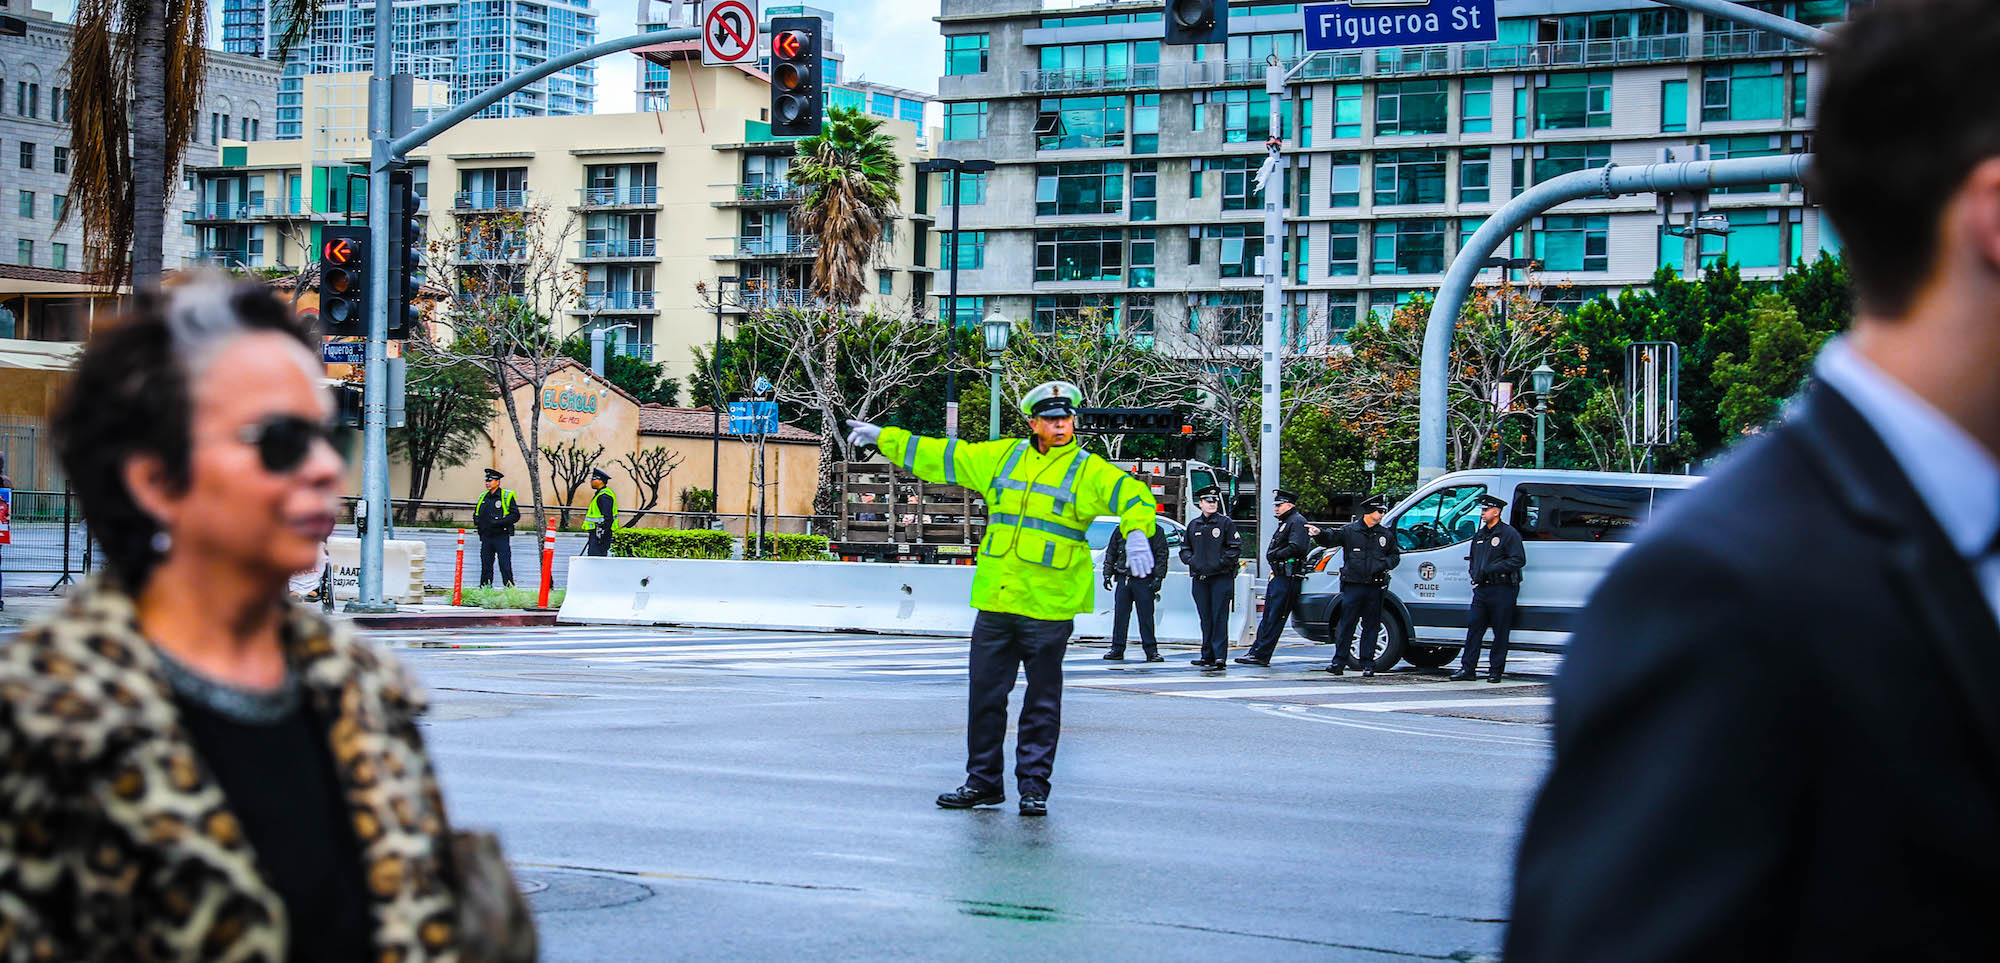 traffic officer and pedestrians